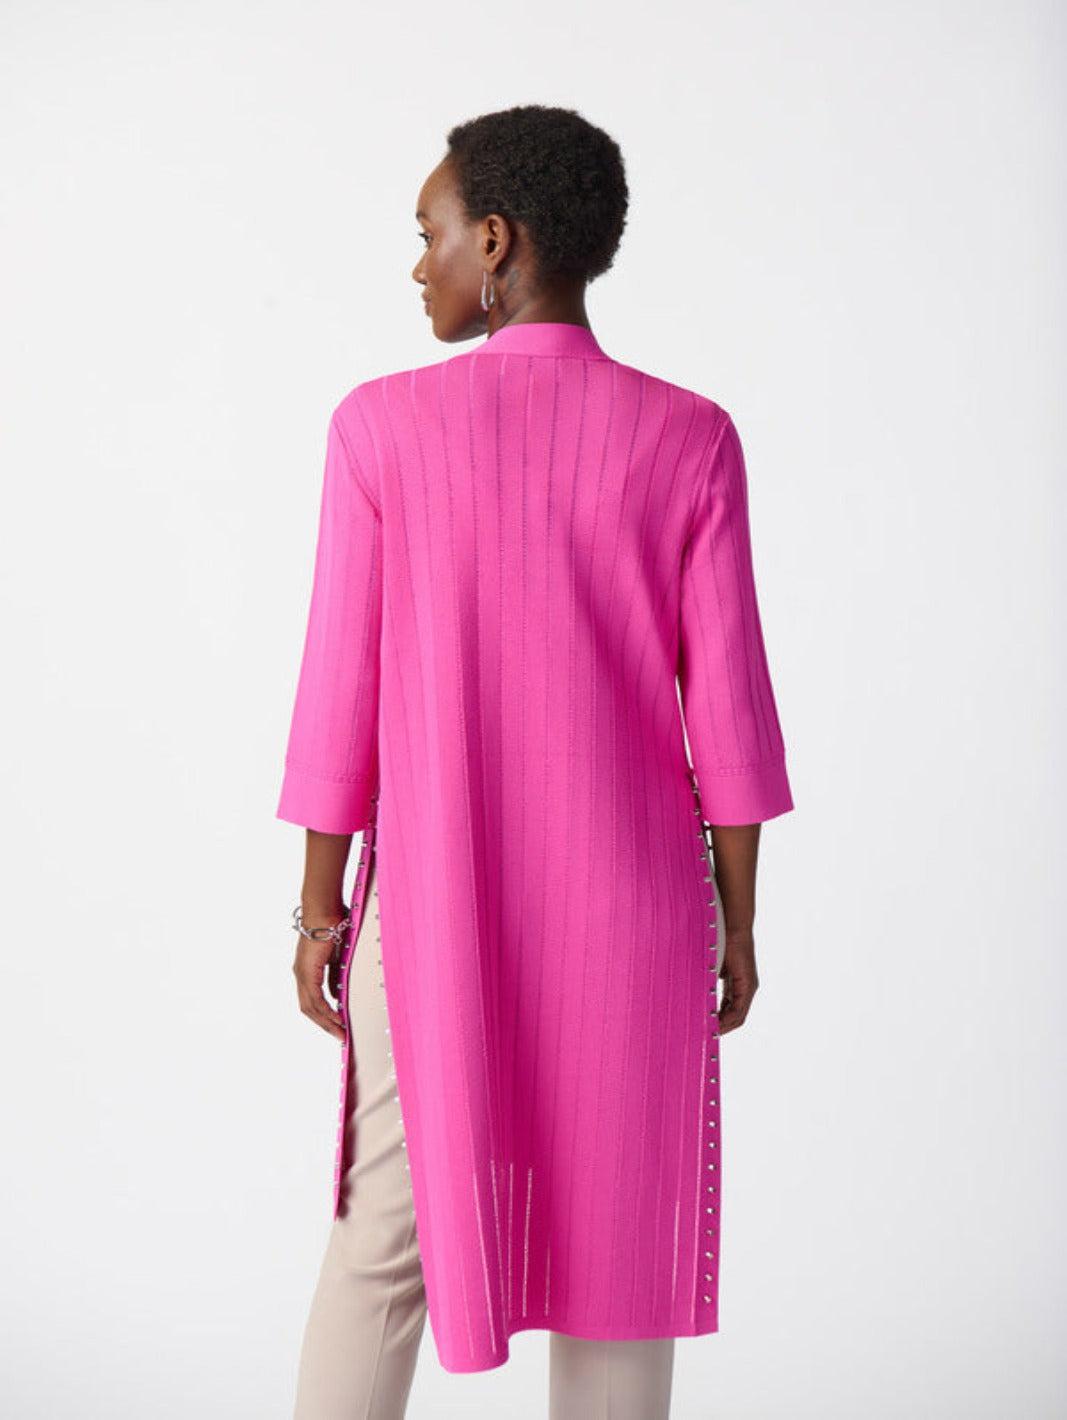 Joseph Ribkoff Rib Knit Cover-up In Pink 222929S24-Nicola Ross